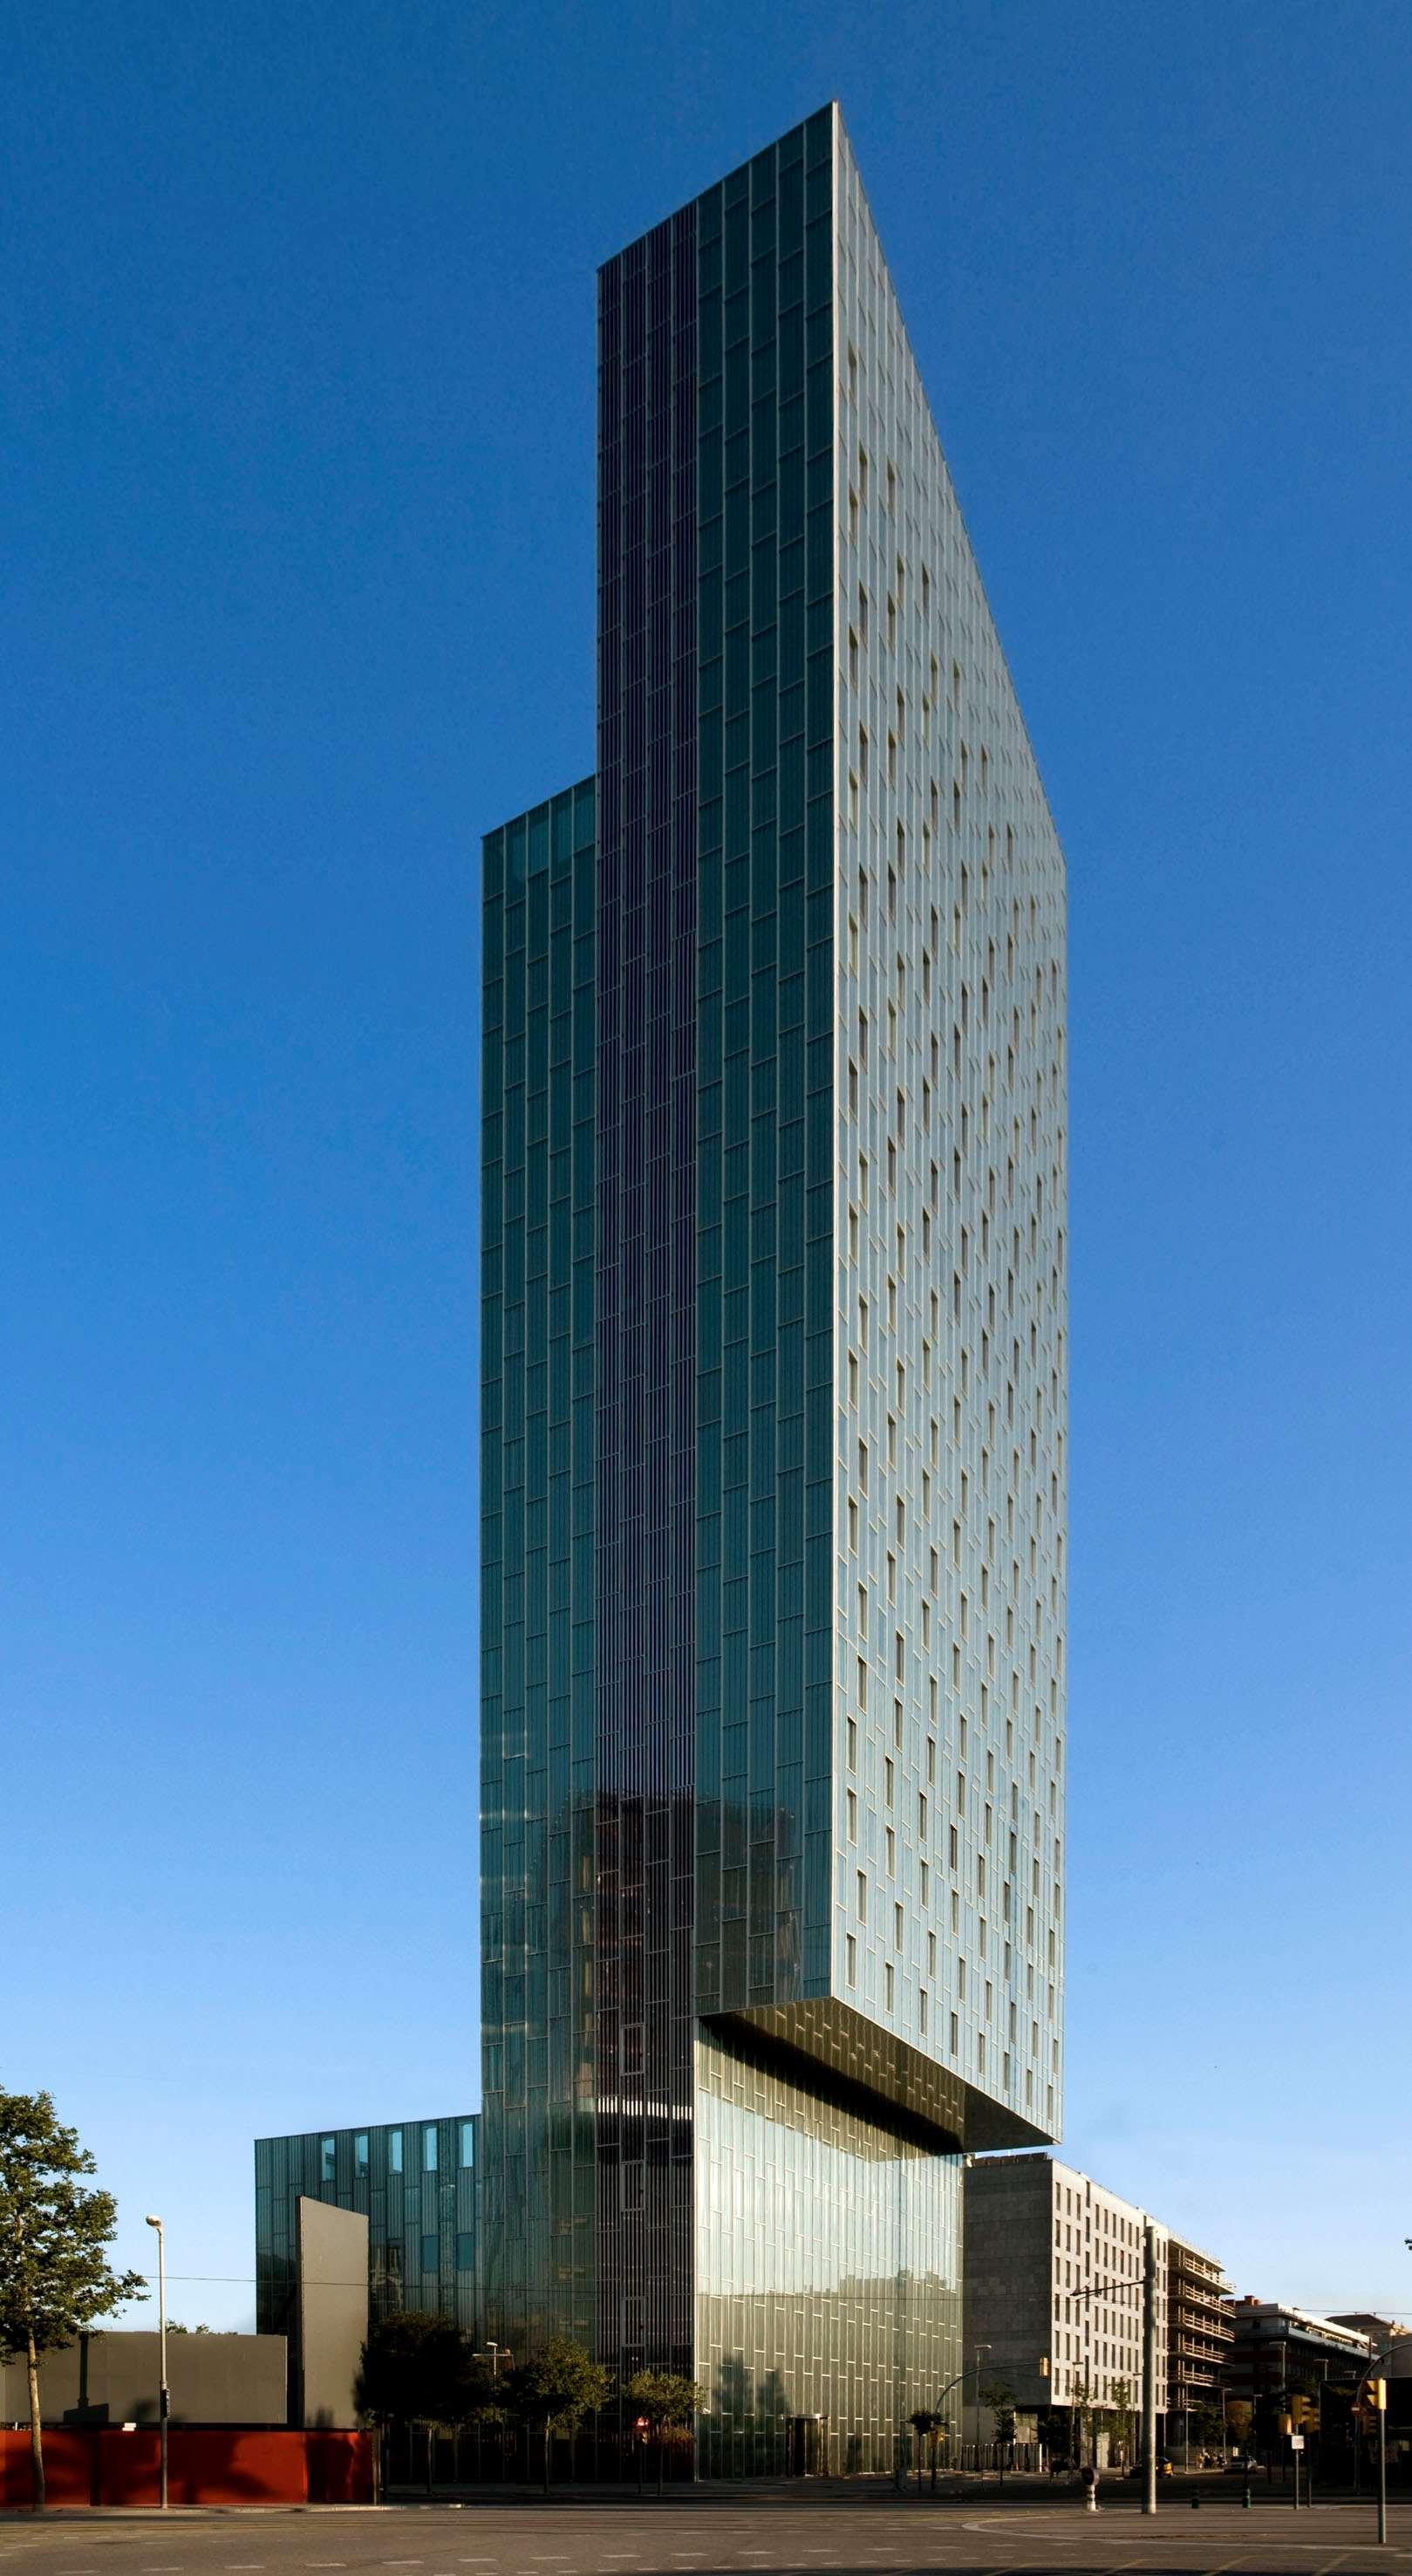 The Level at Meliá Barcelona Sky